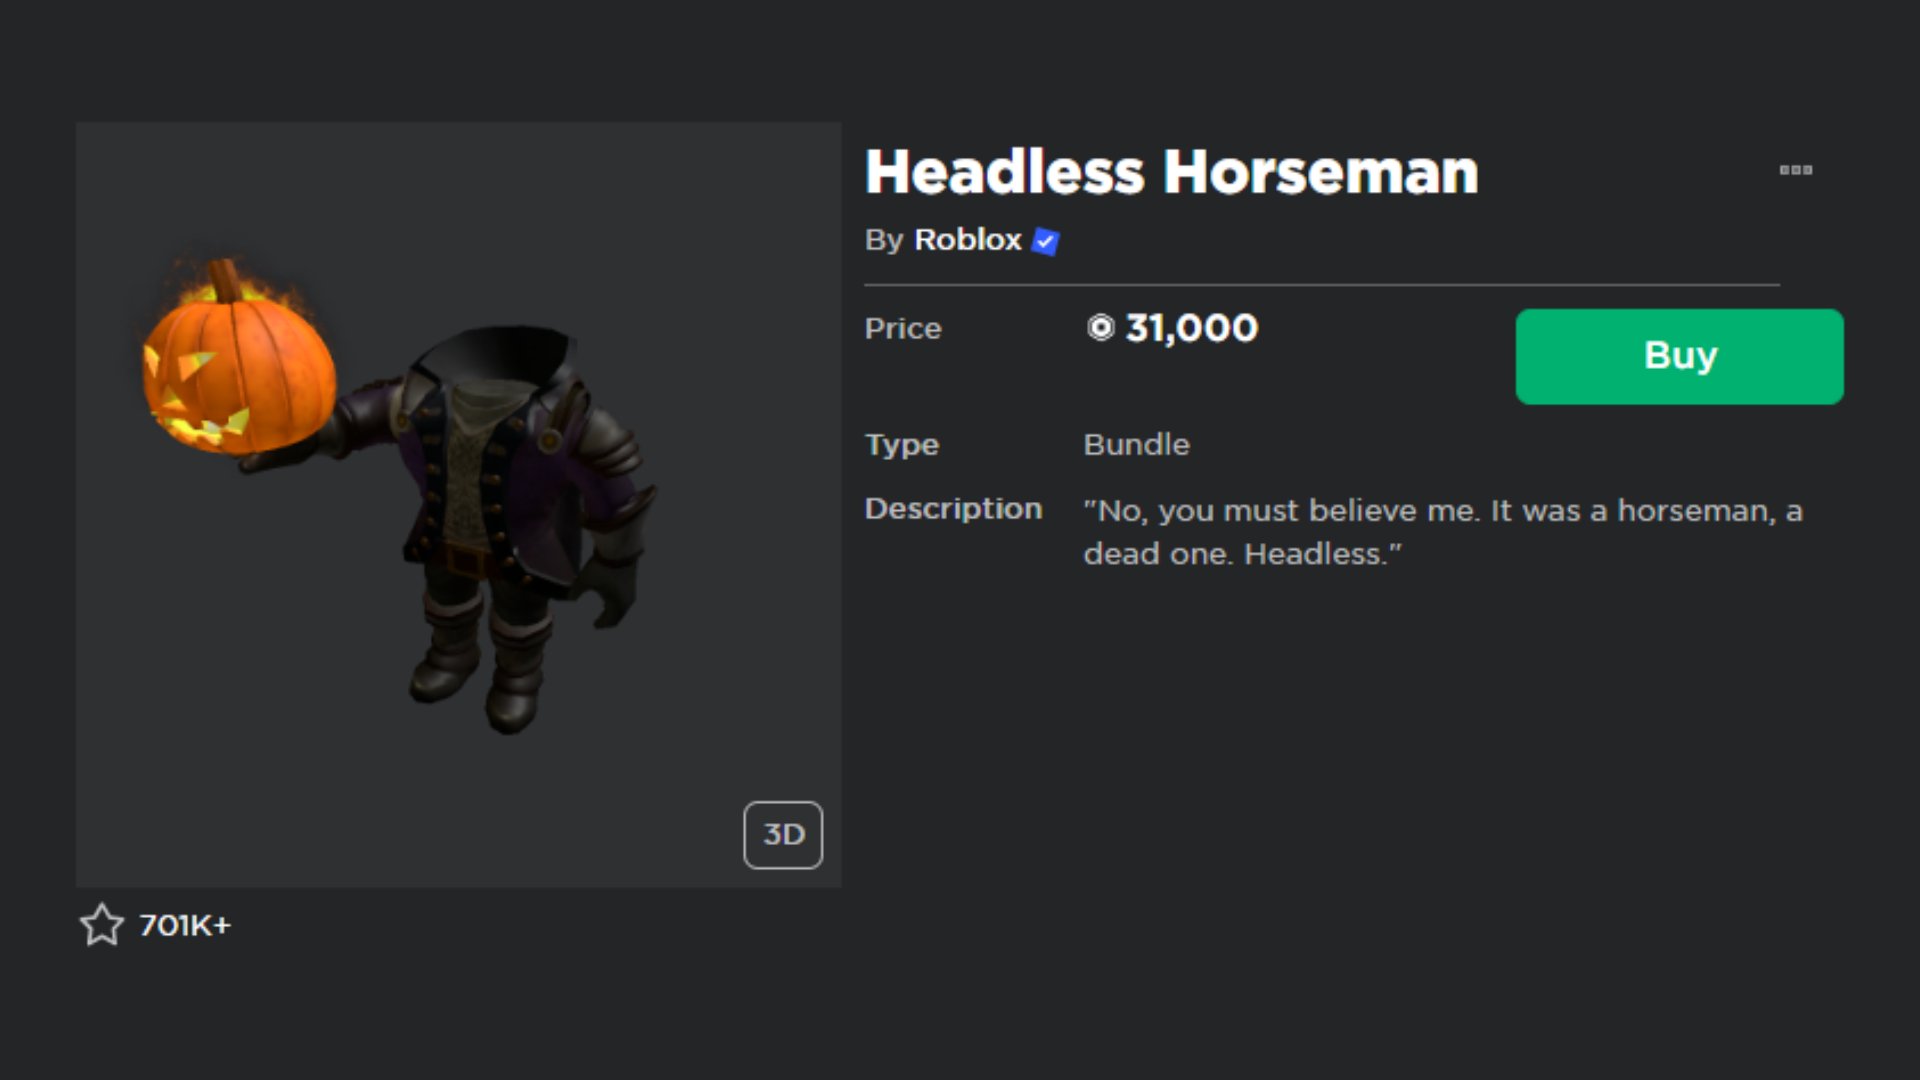 I bought the headless horseman.. rip 31k robux 